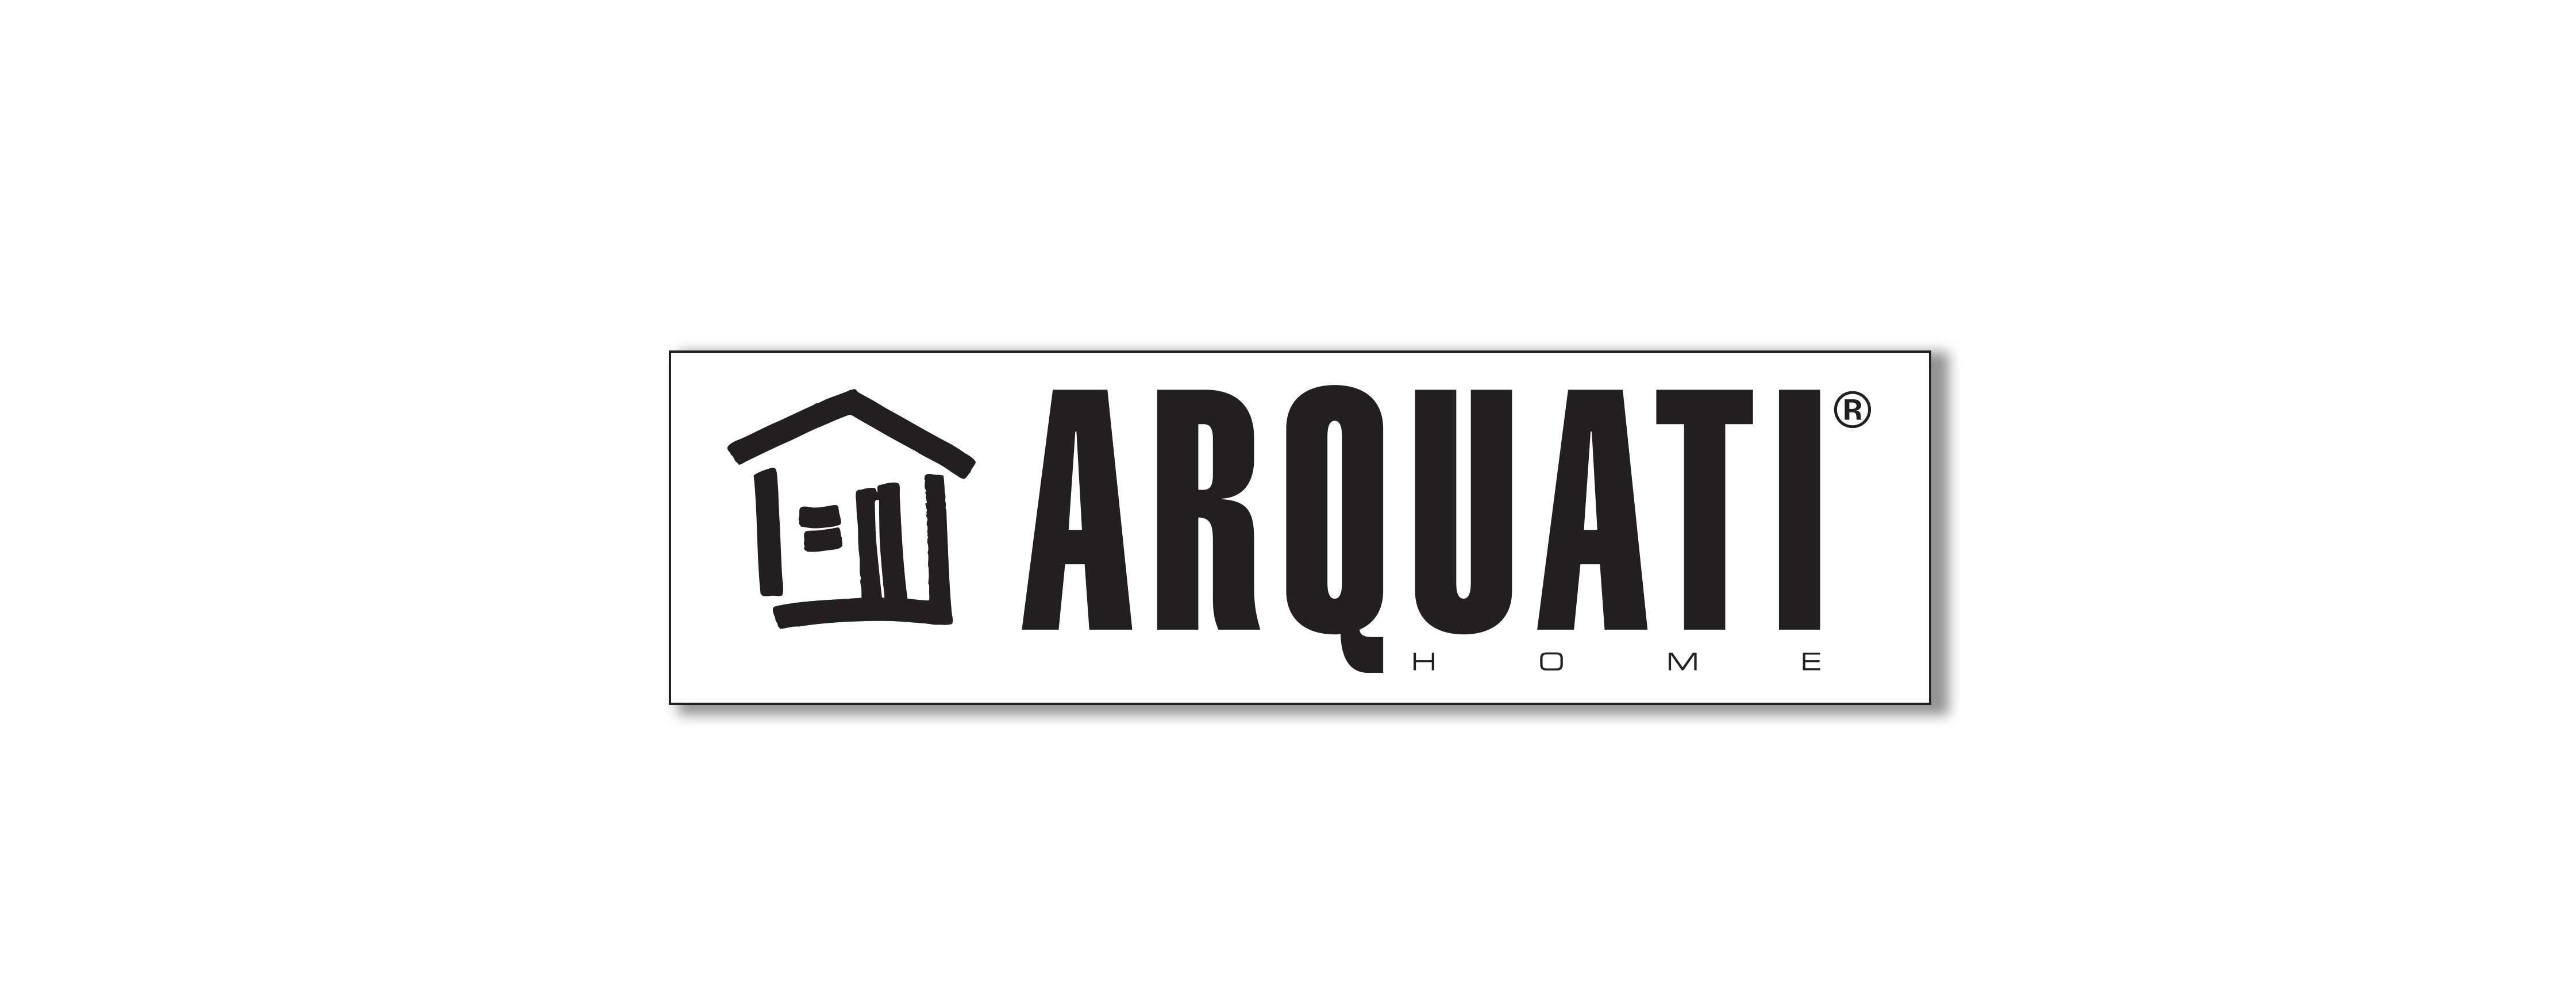 arquati_brand